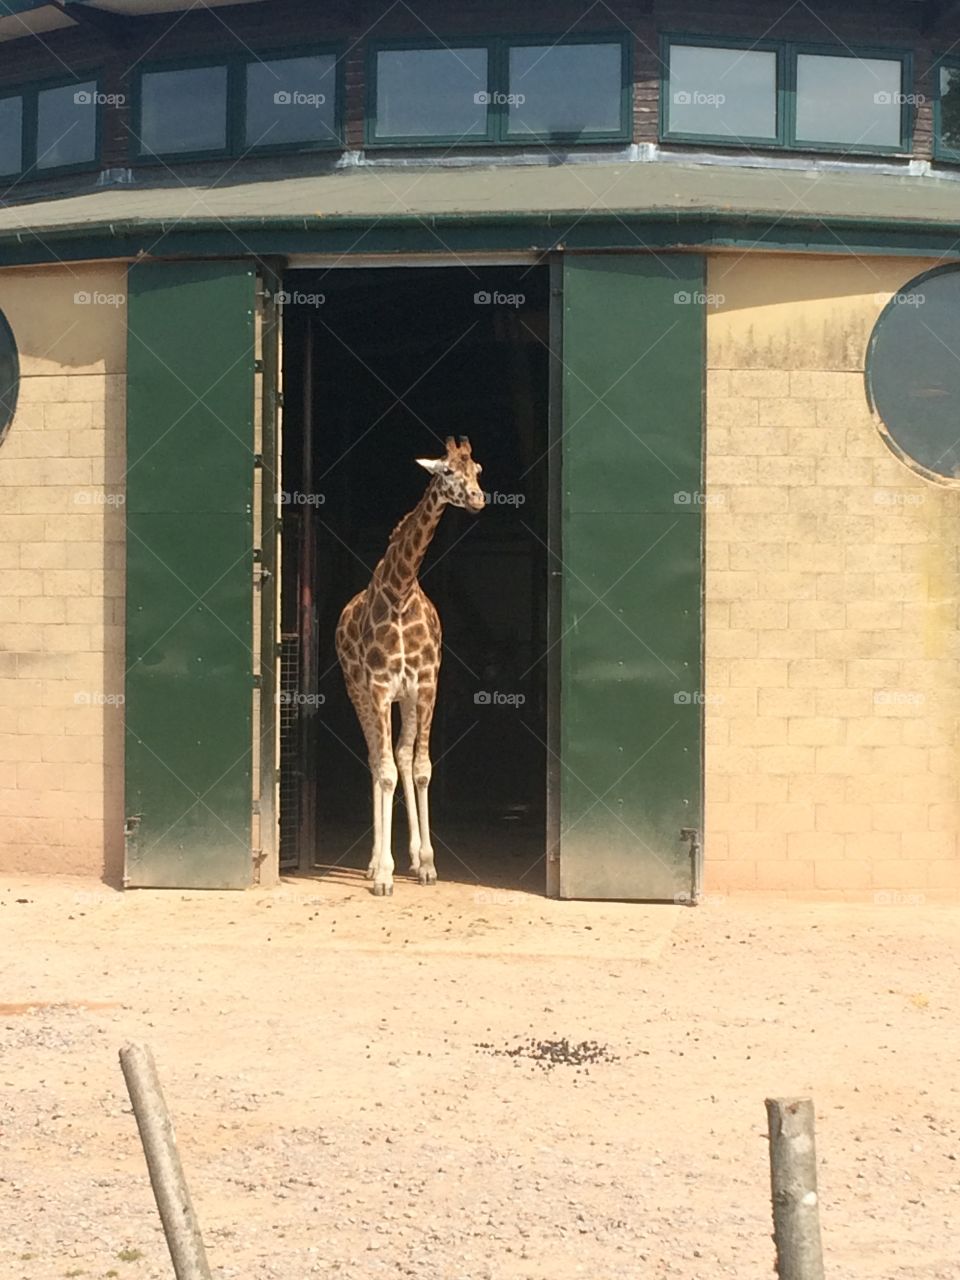 Very timid giraffe 